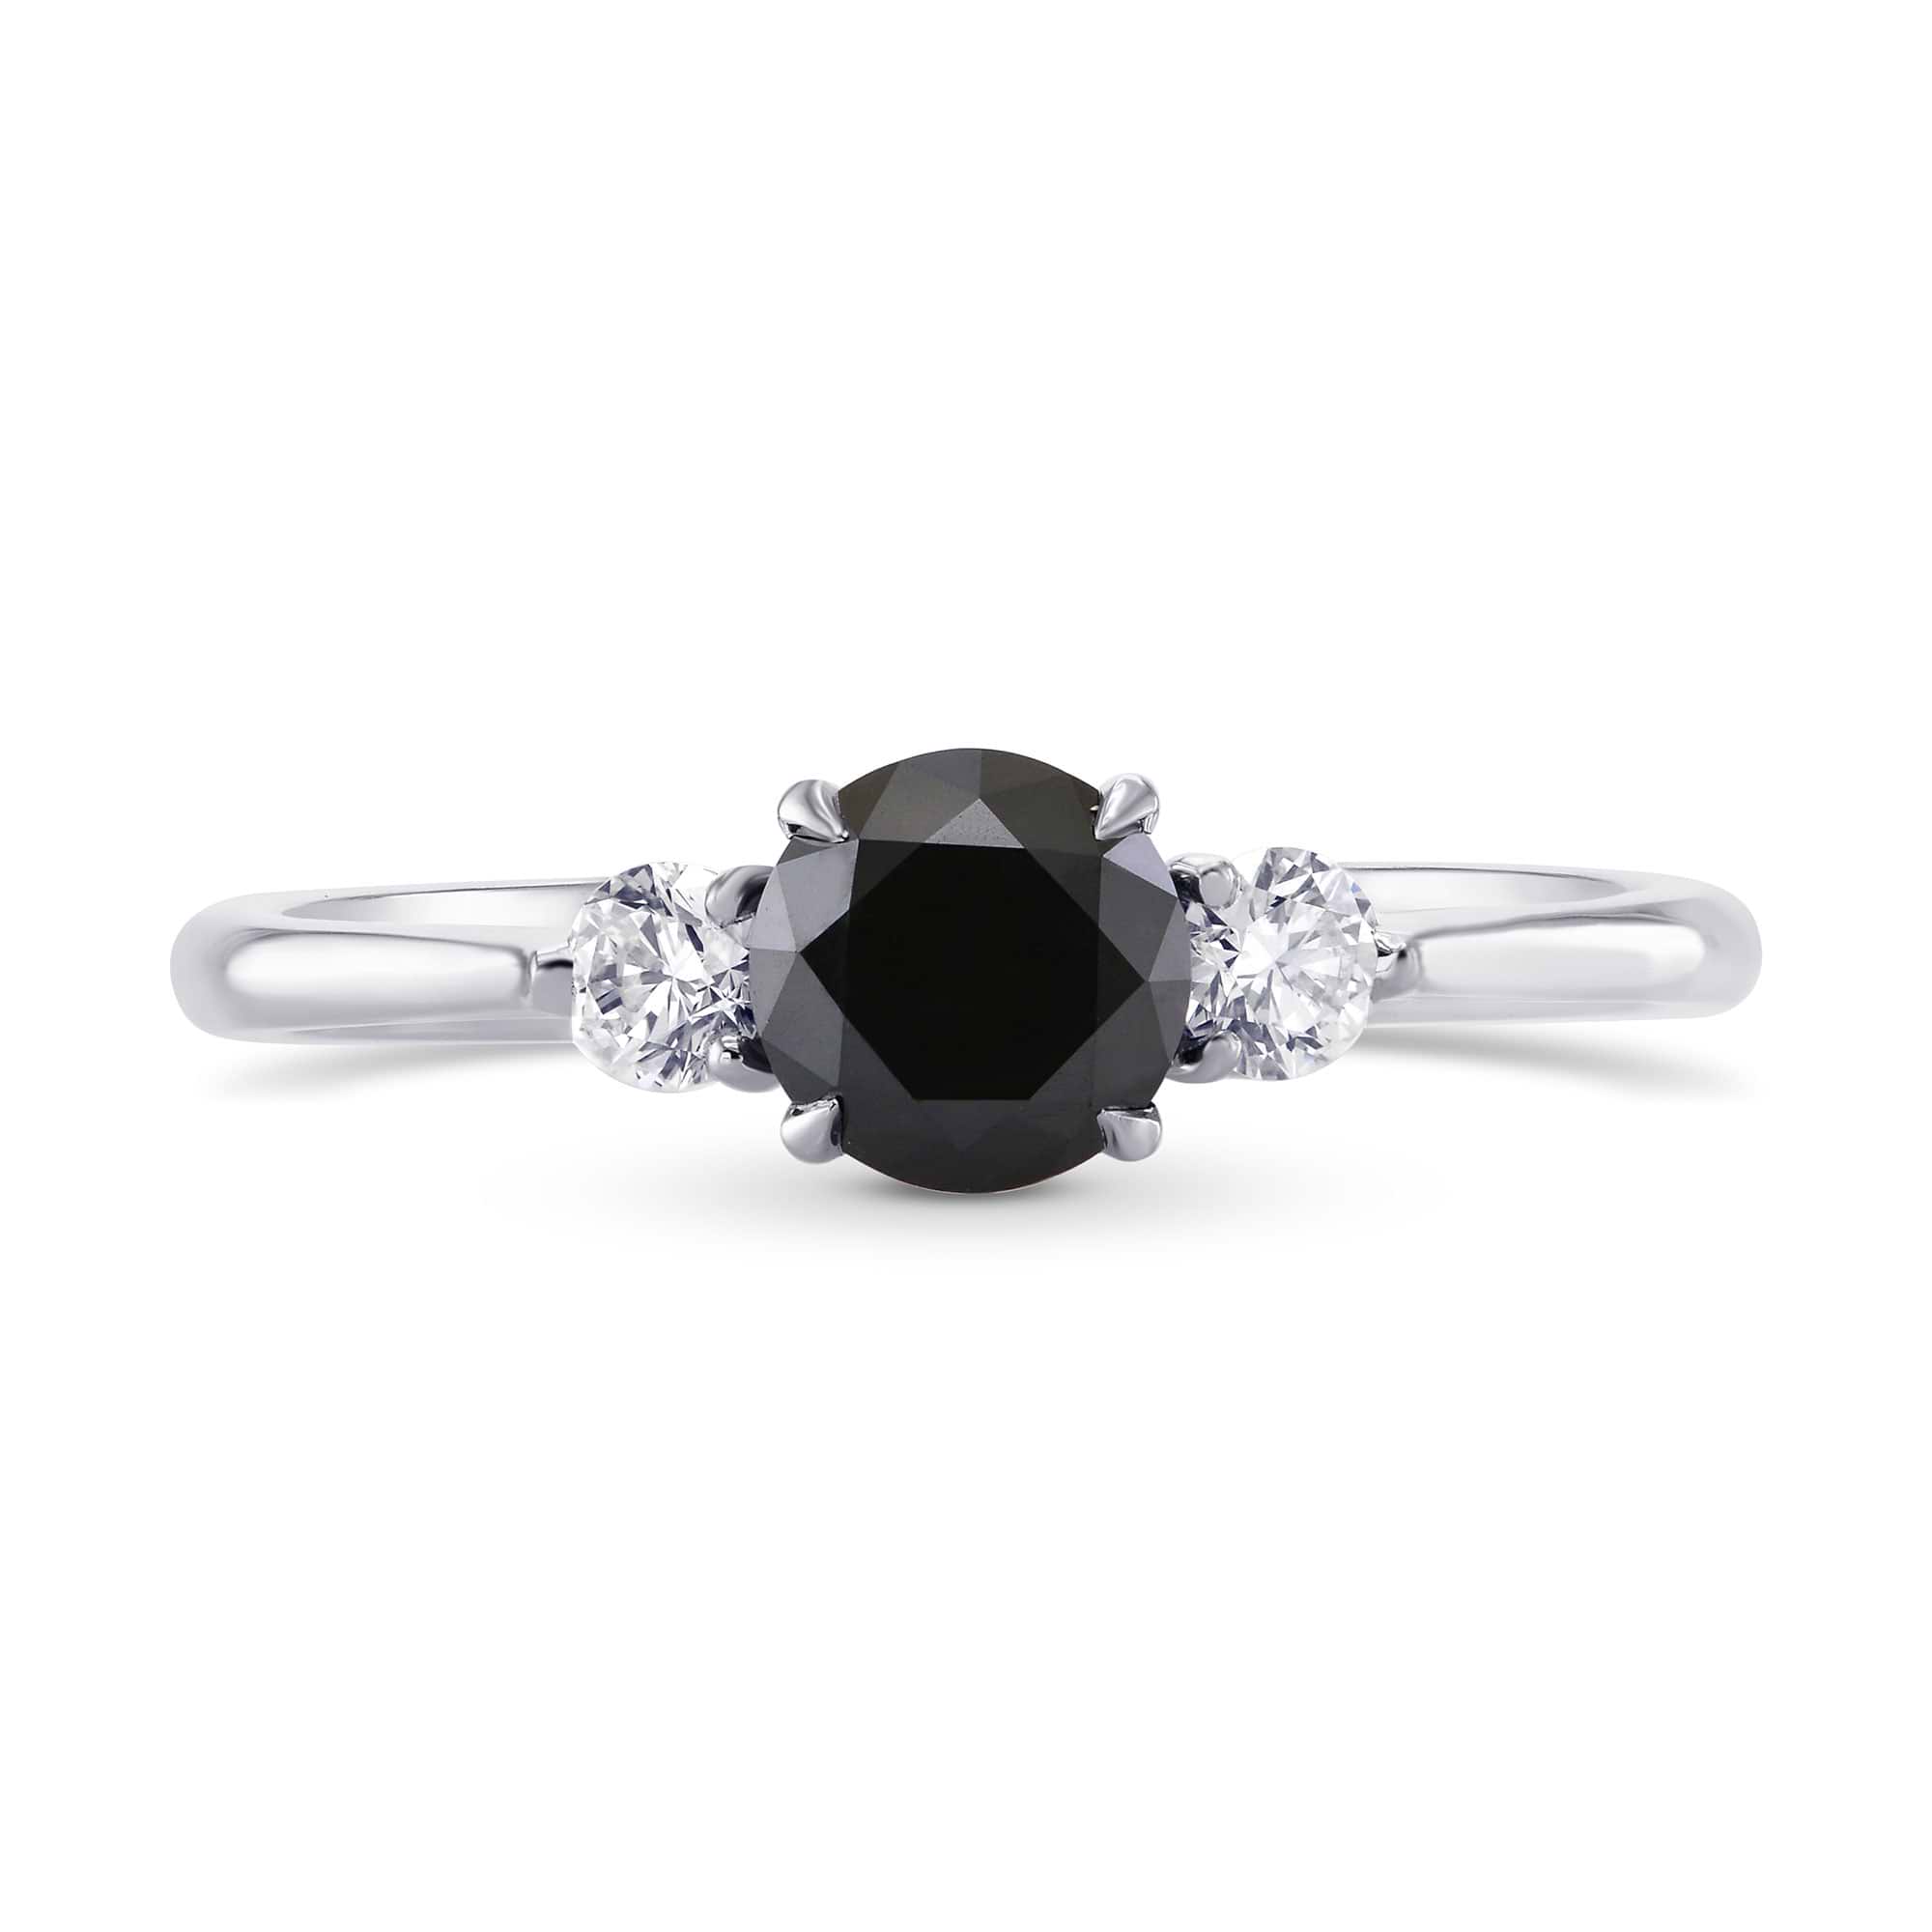 Black & White Diamond Round Brillant 3 Stones Ring, SKU 278203 (1.56Ct TW)